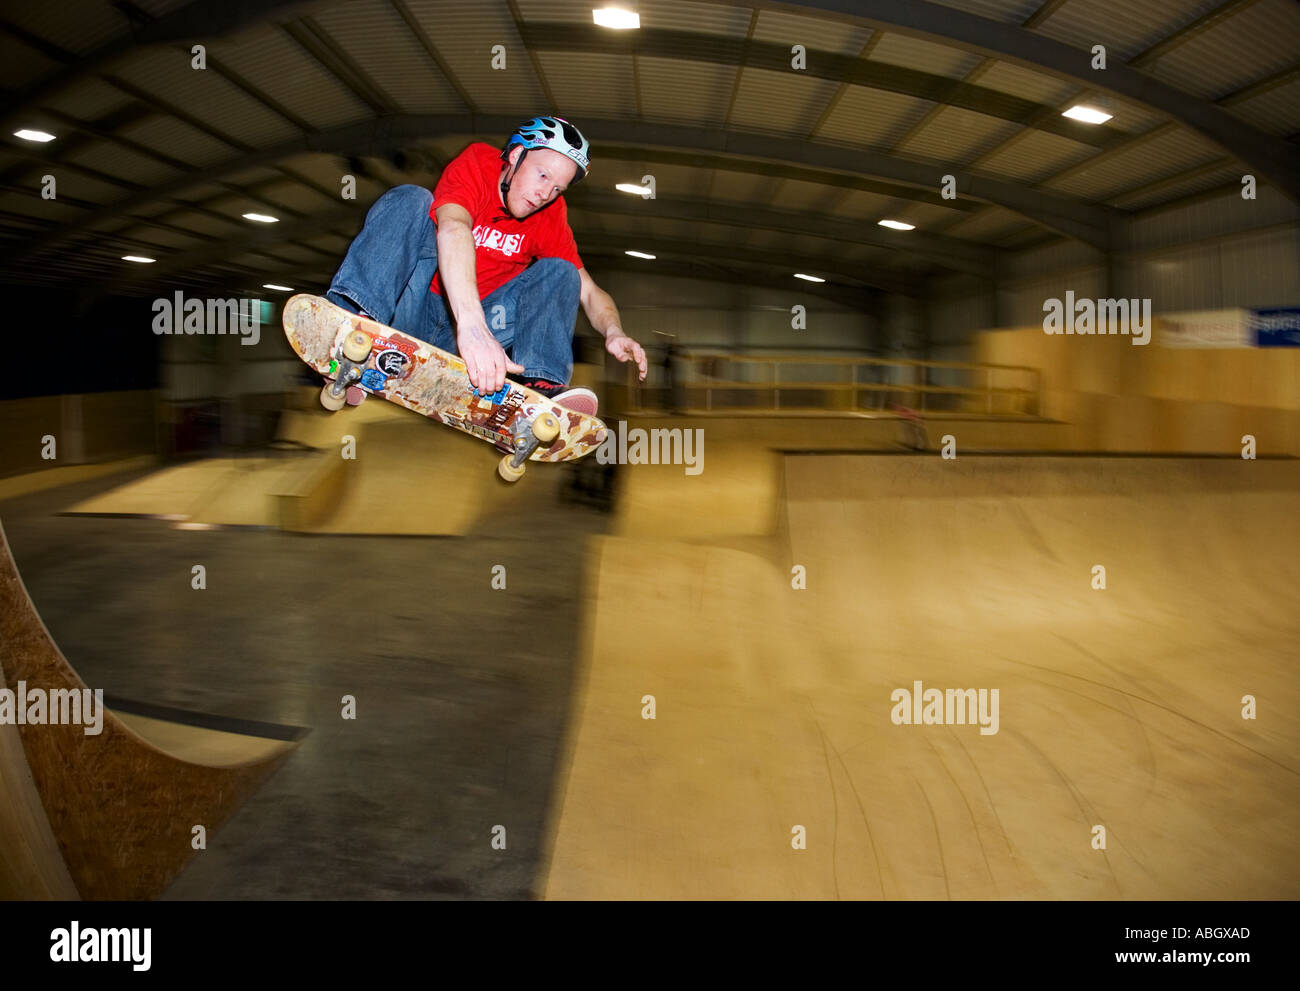 Skateboarder grab trick Stock Photo - Alamy